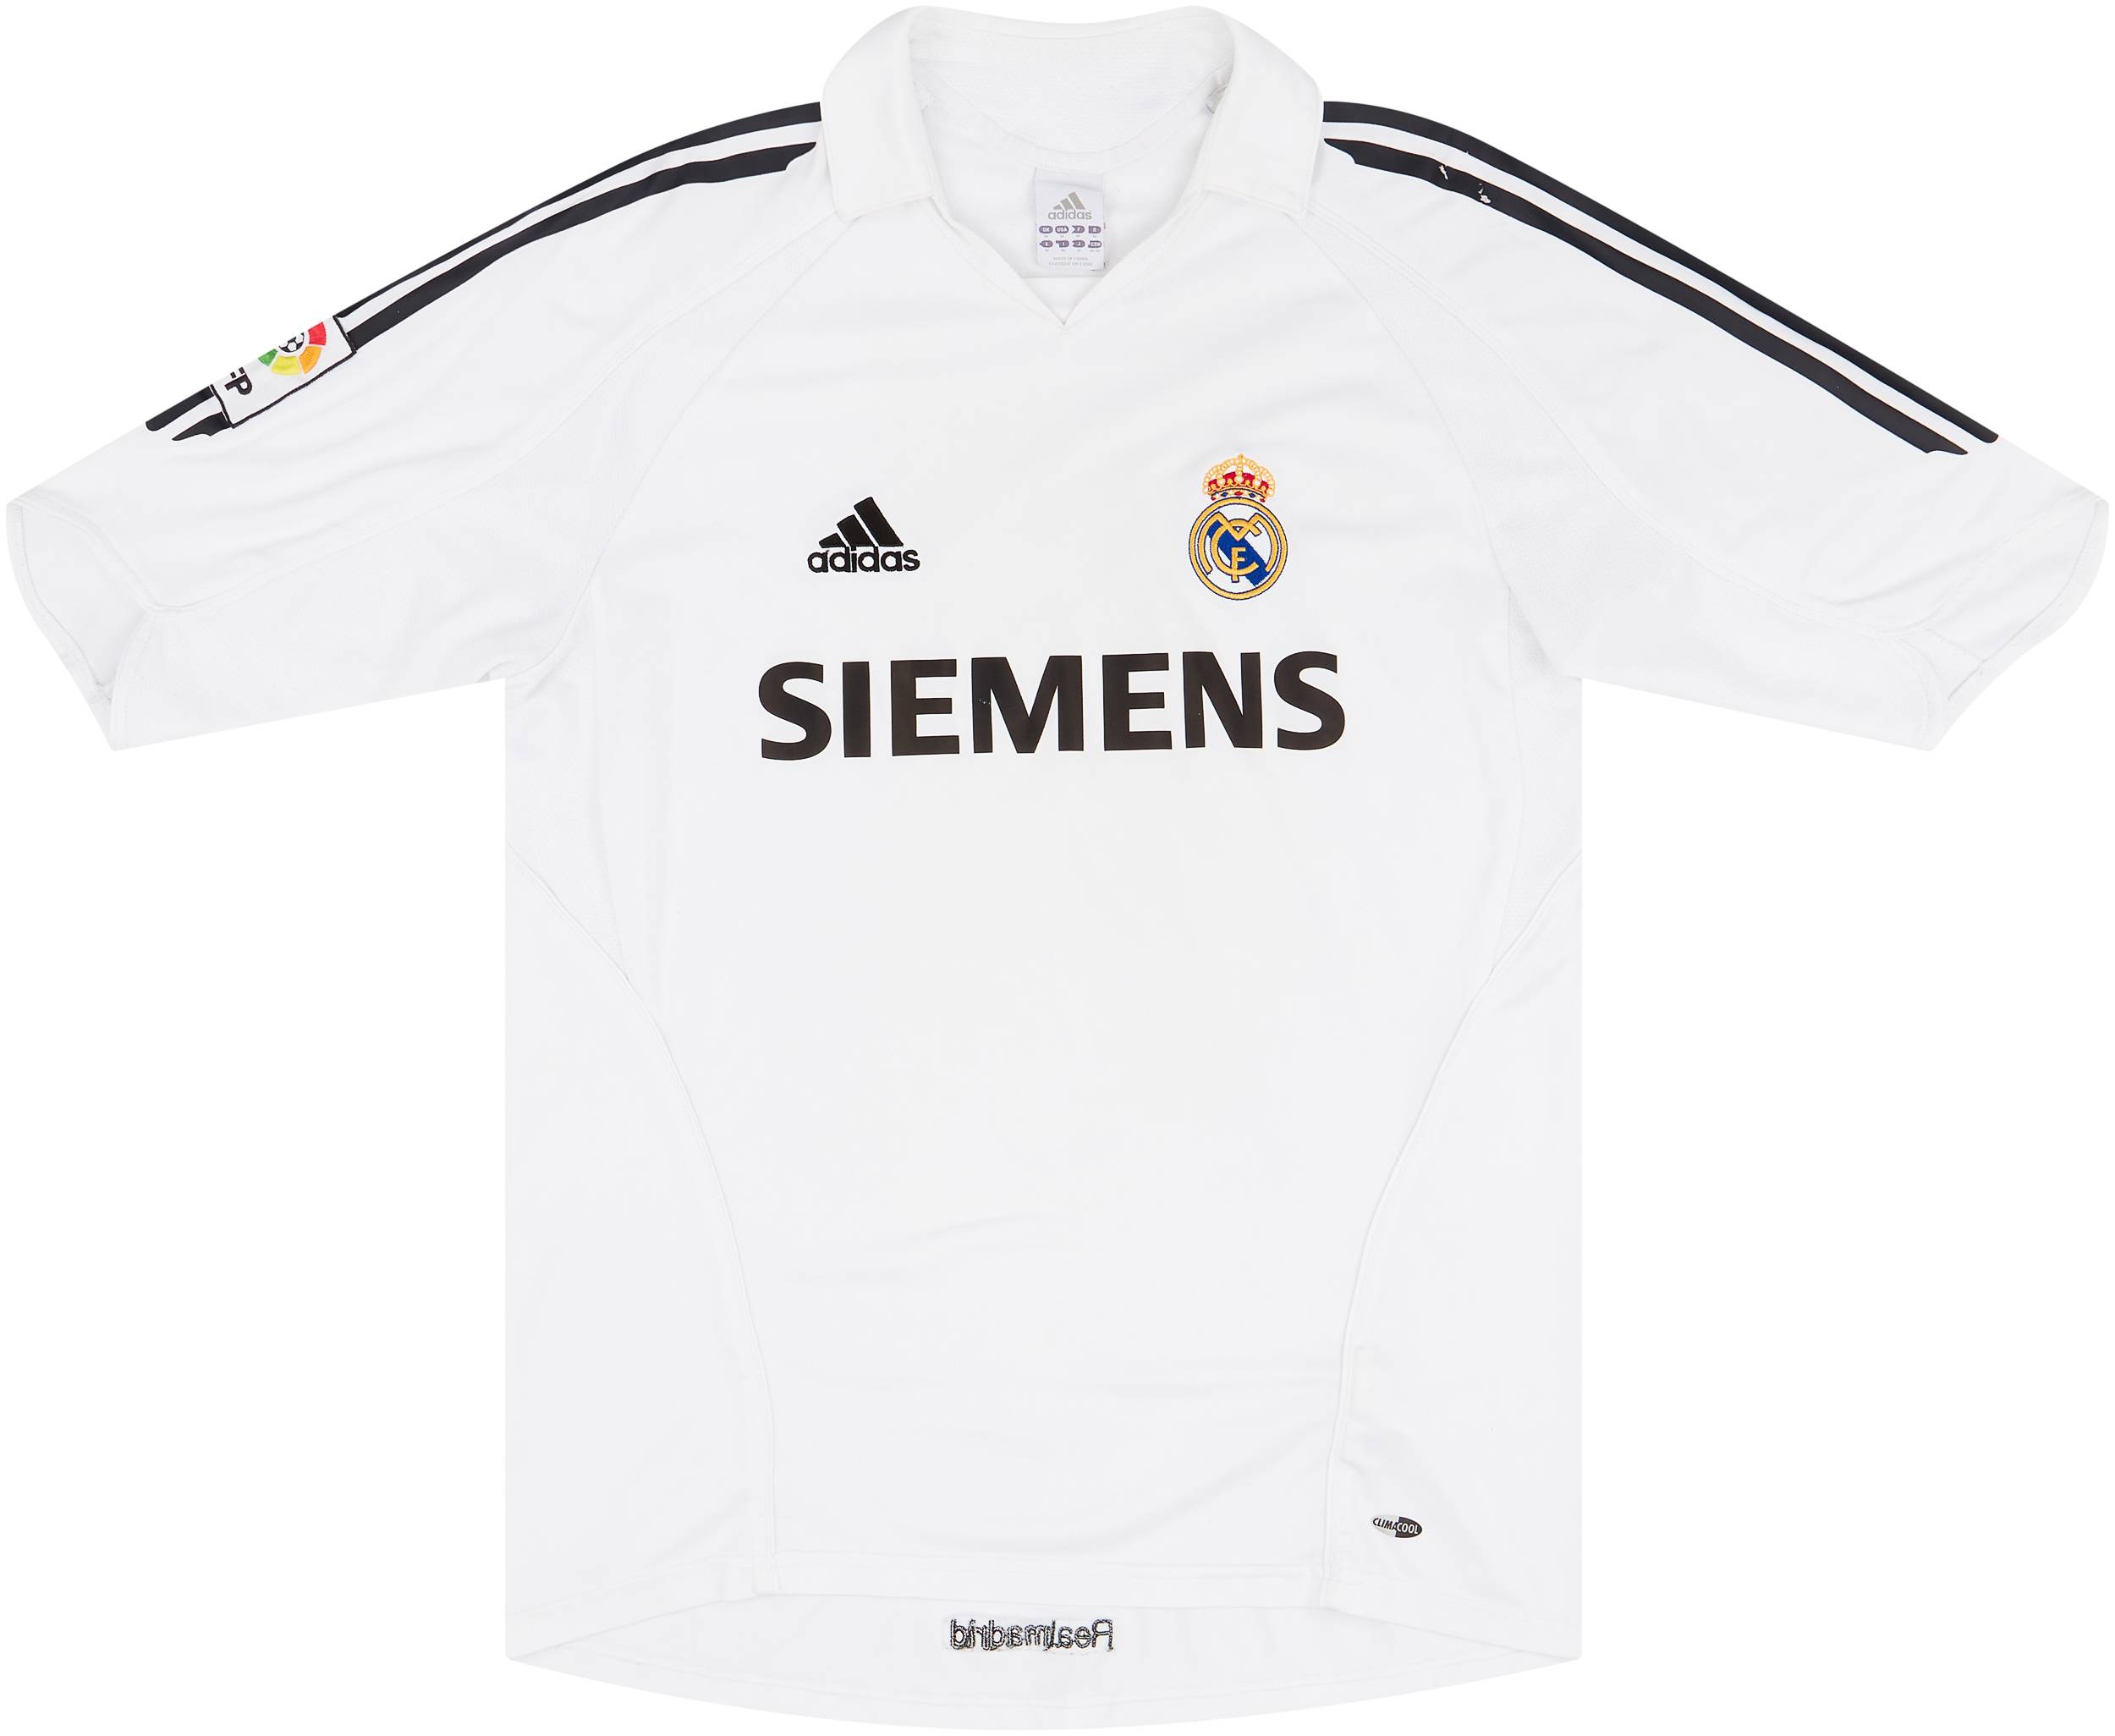 2005-06 Real Madrid Home Shirt - Good 5/10 - (M)